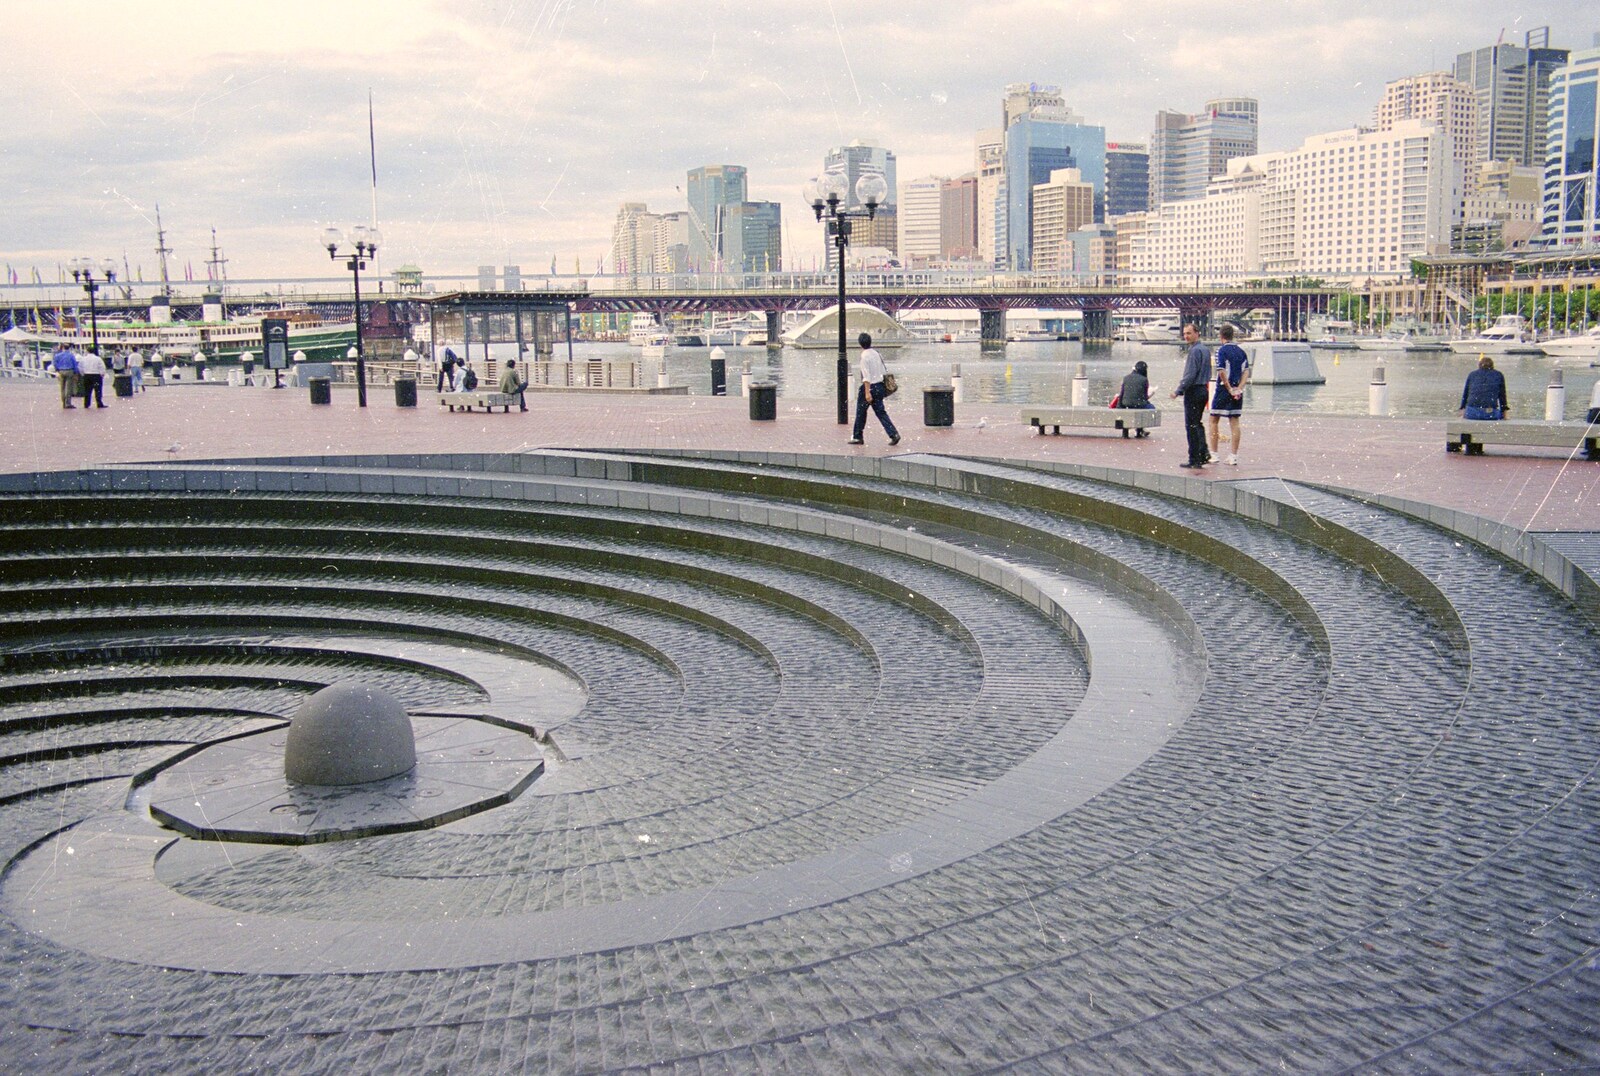 A water feature near Darling Harbour from Sydney Triathlon, Sydney, Australia - 16th April 2000